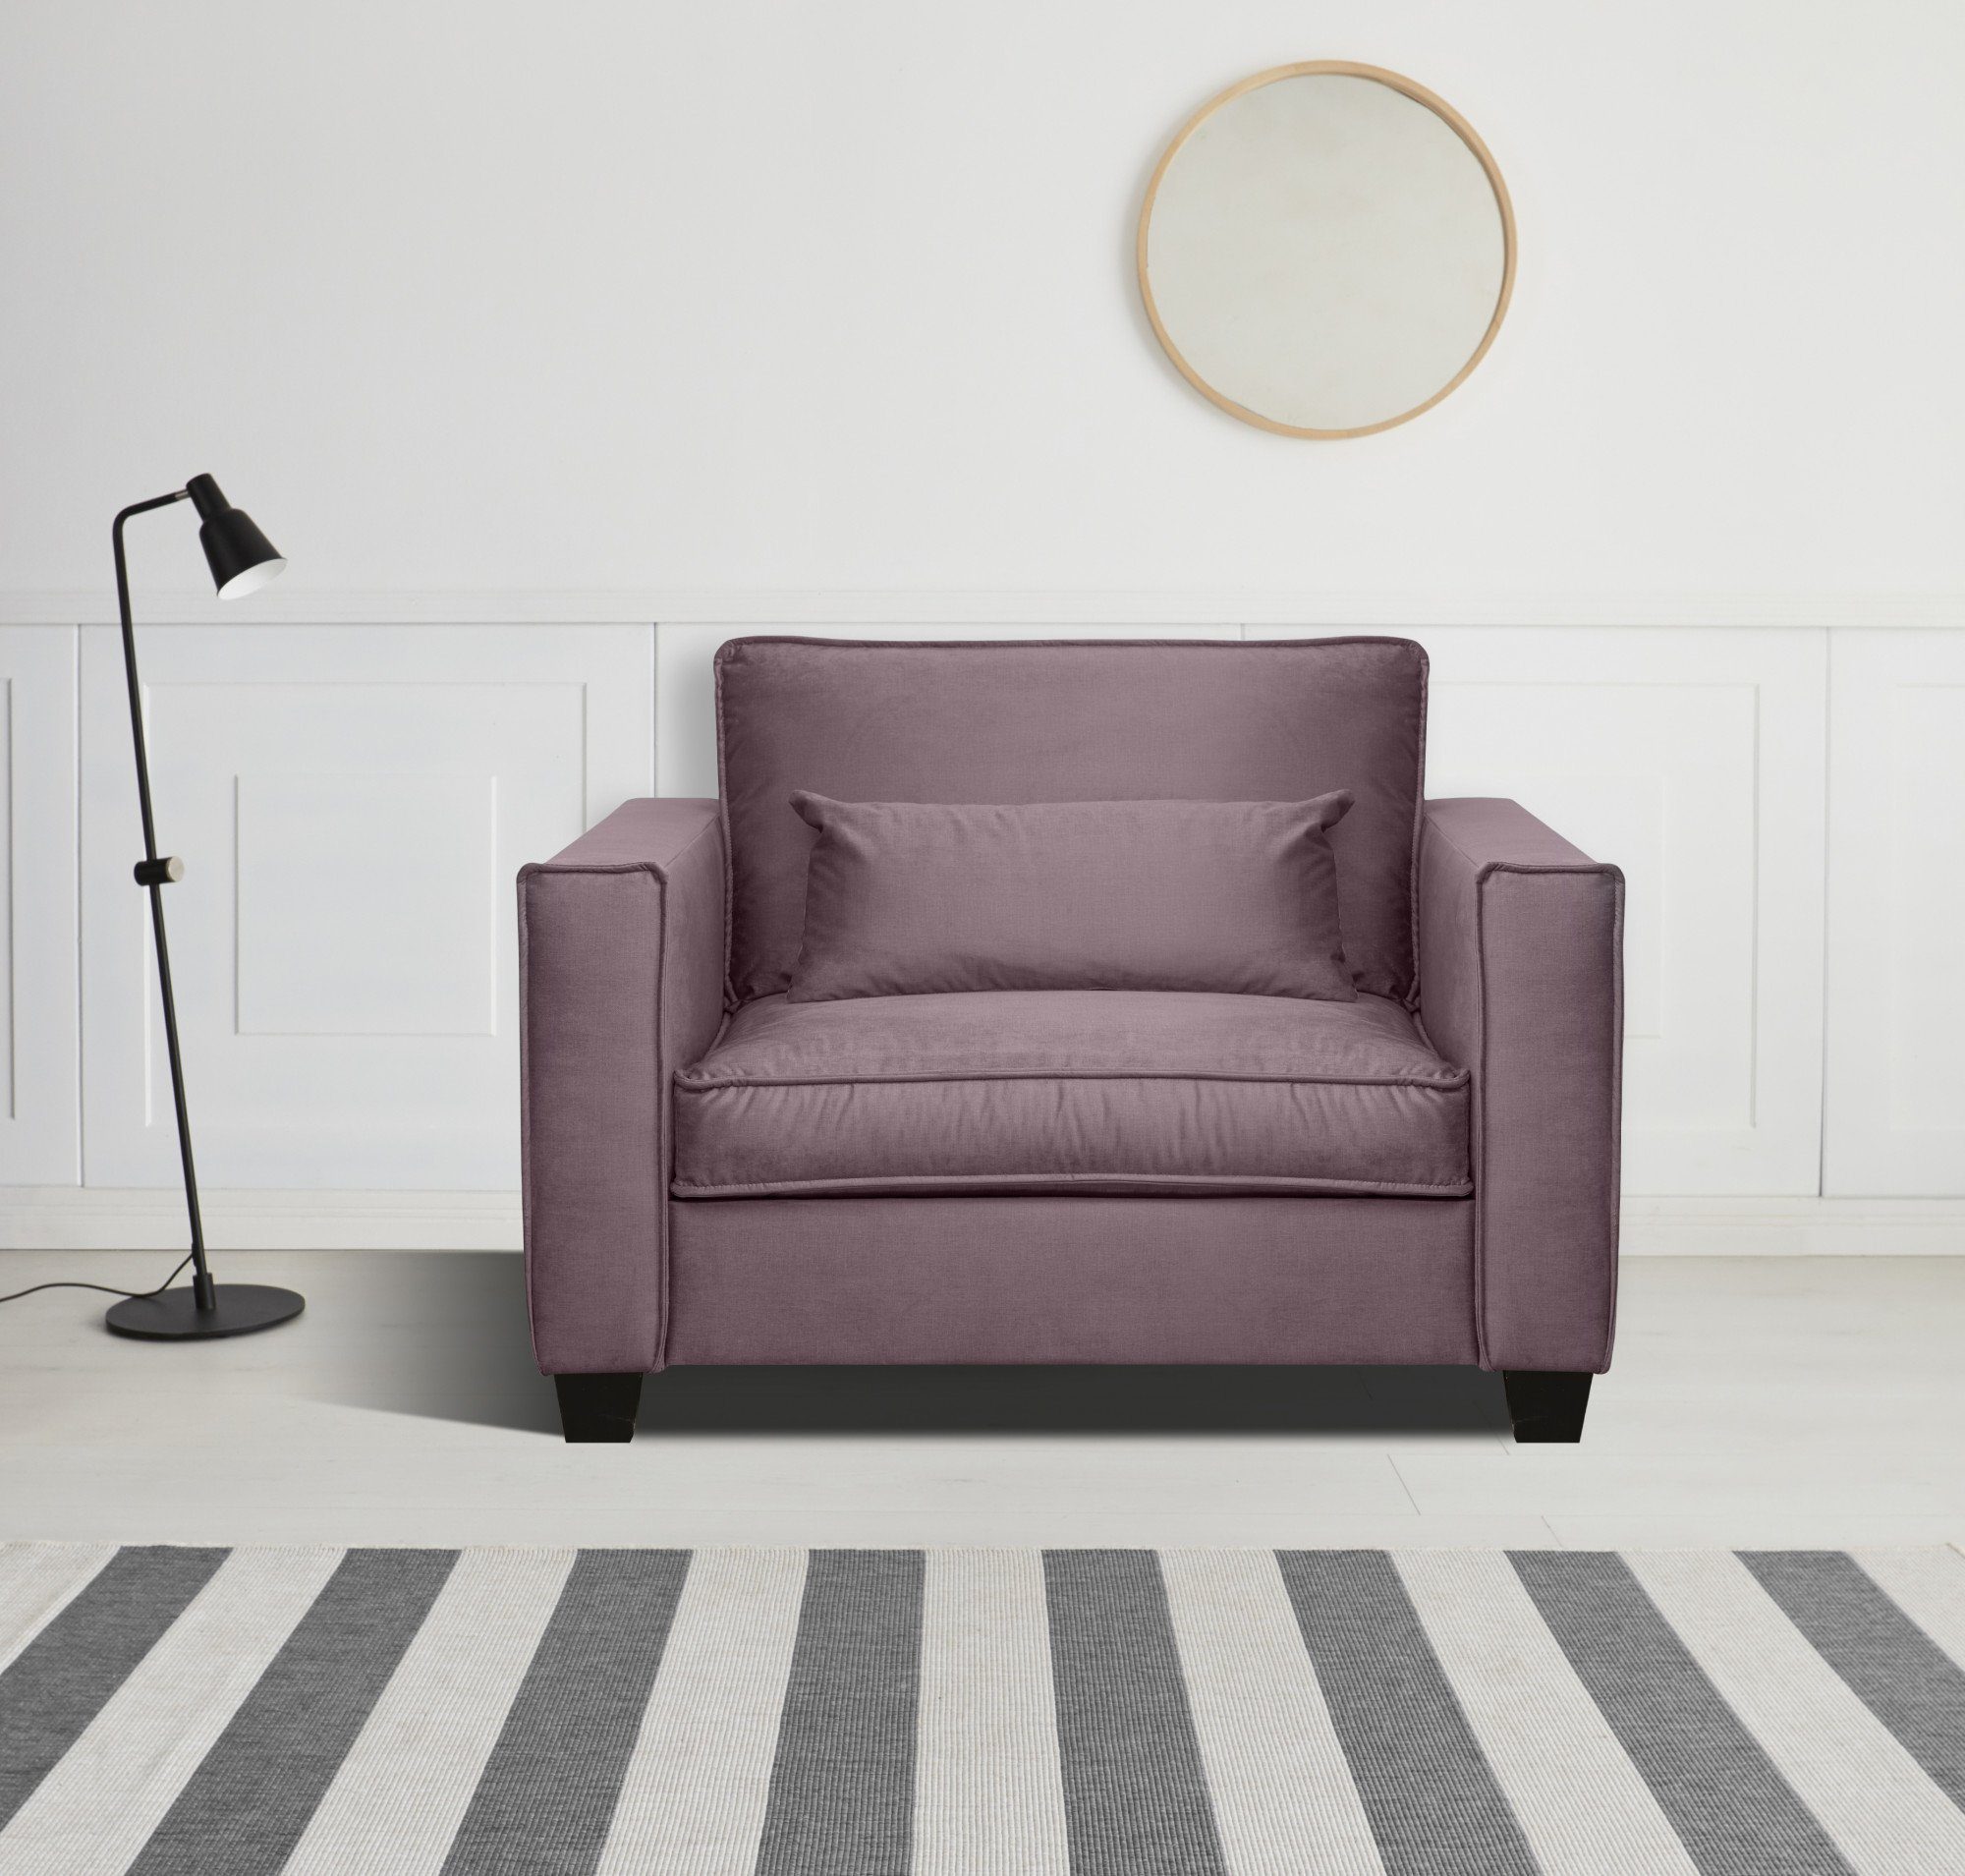 Home affaire Sessel Tilques, bequeme Sitzgelegenheiten, viele Farben verfügbar violet pink